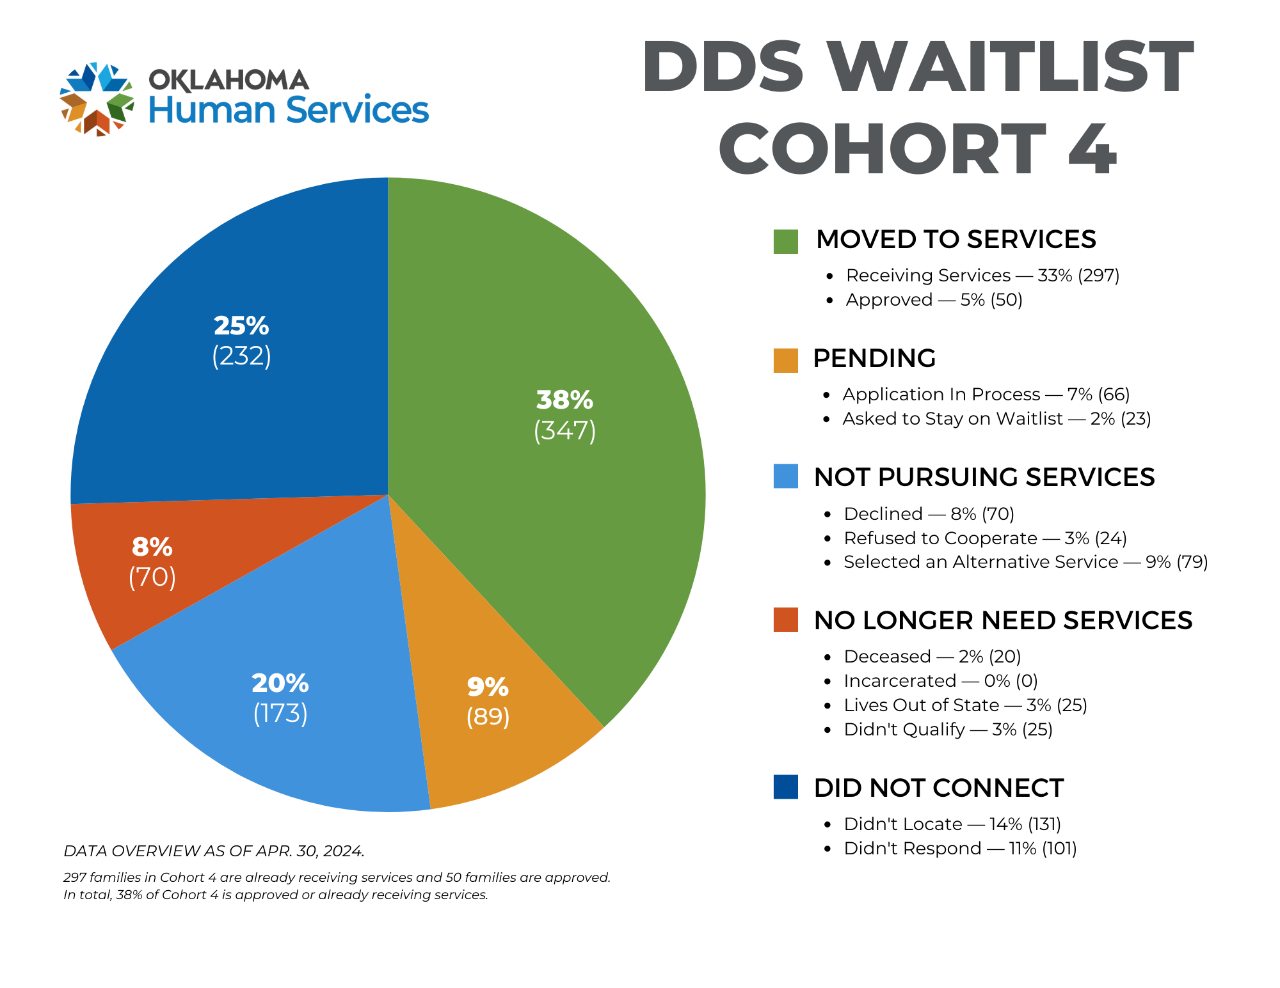  Pie chart for DDS Waitlist Cohort 3. For more information, contact Ryan Stewart at ryan.stewart@okdhs.org